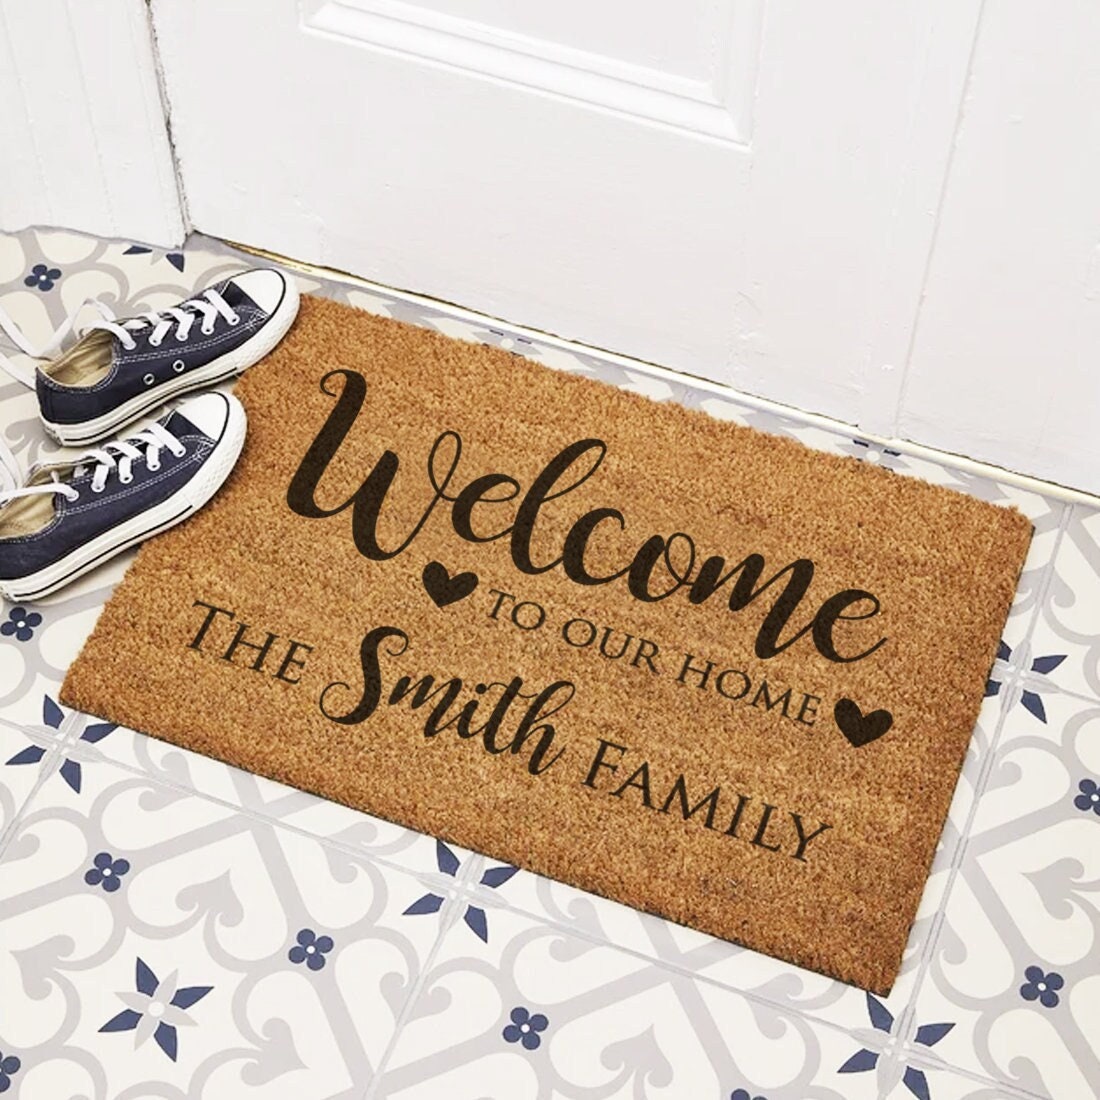 Agenda For The Day Golden Retriever Doormat, Personalized Welcome Mat  Indoor Room, New Home Gift, Housewarming gift entrance Doormat - Nethomellc